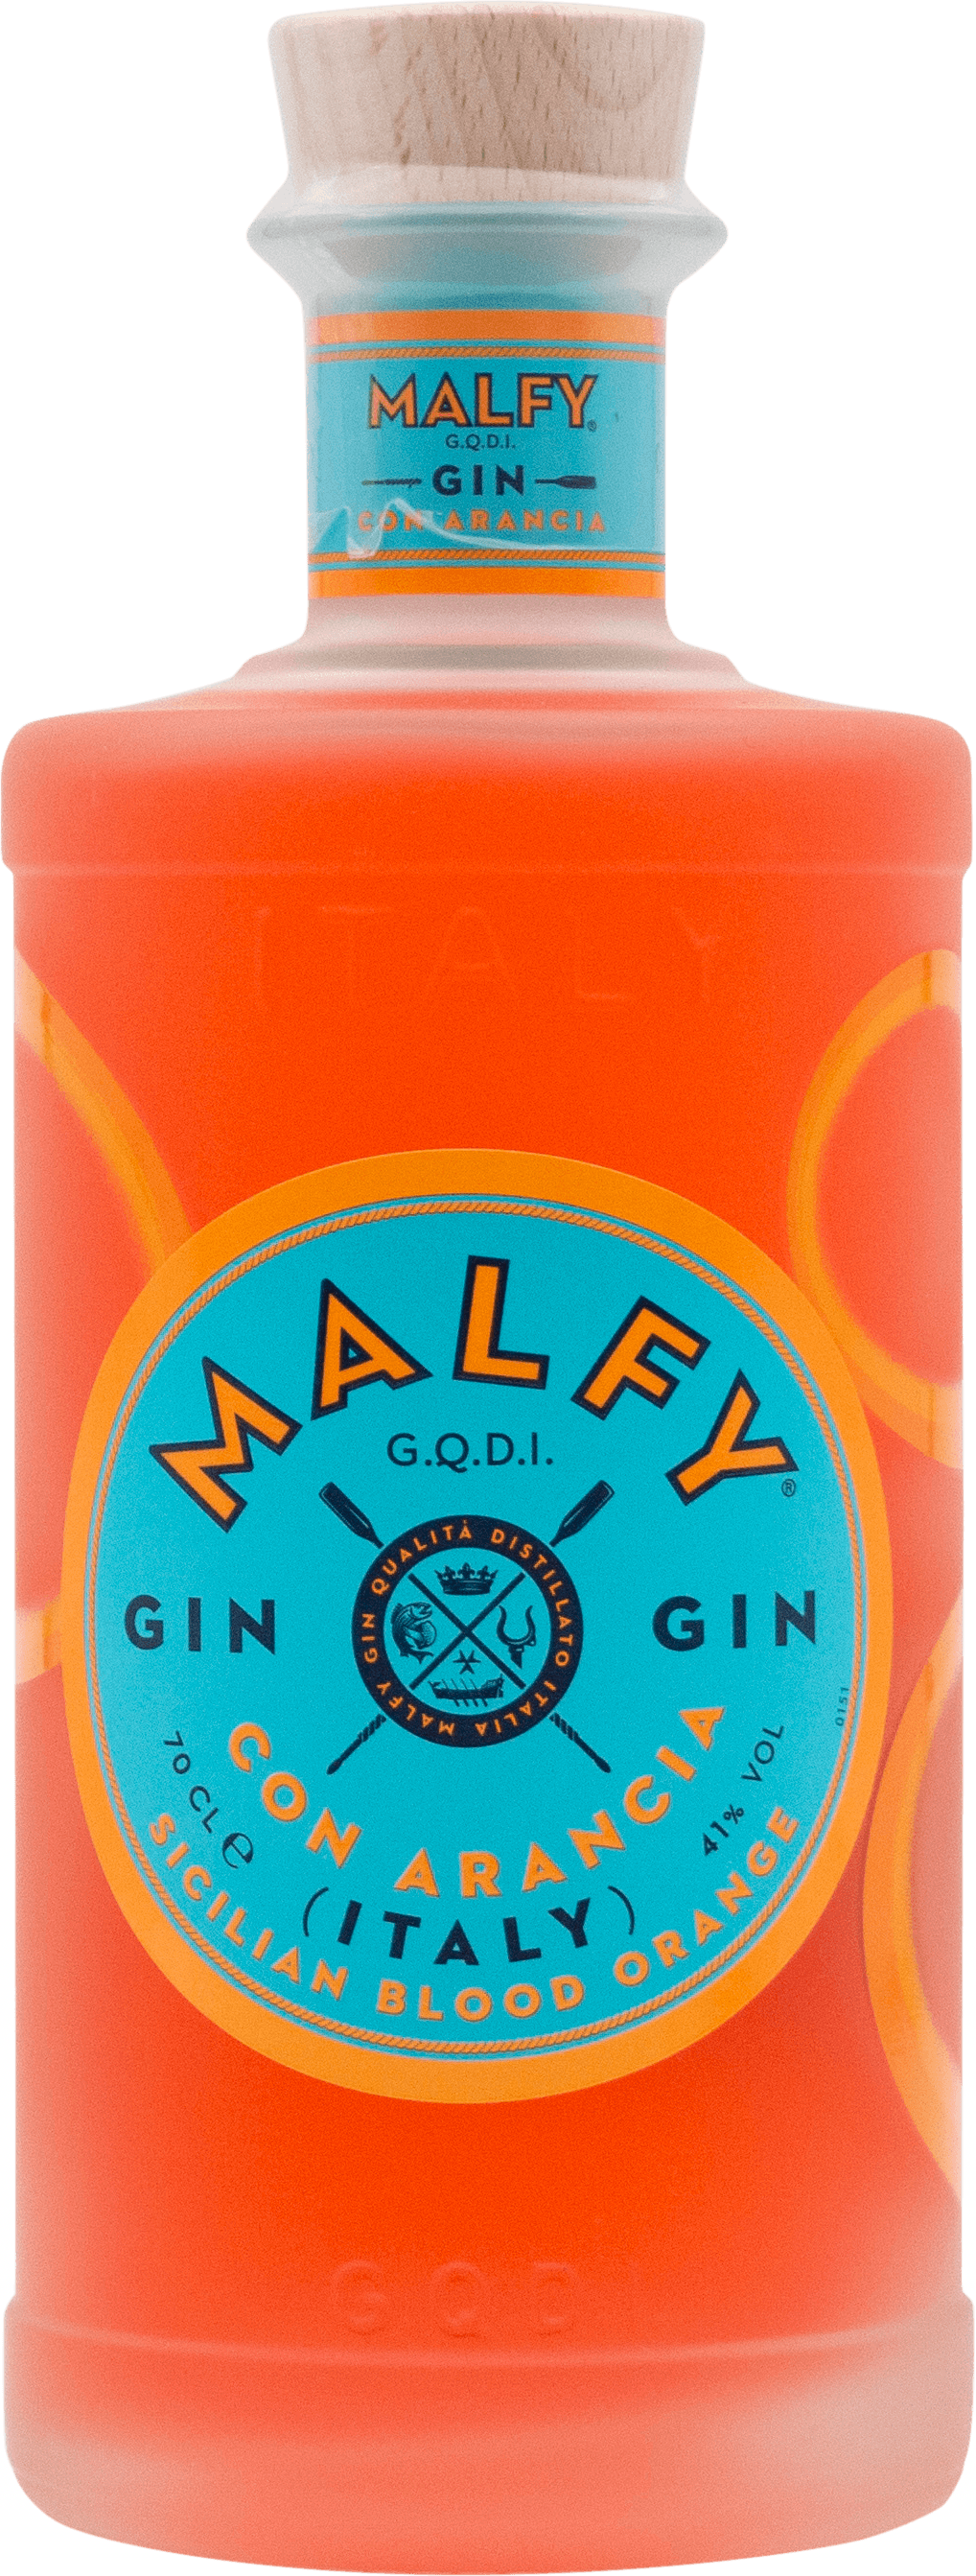 An image of a bottle of Malfy Con Arancia Blood Orange Italian Gin